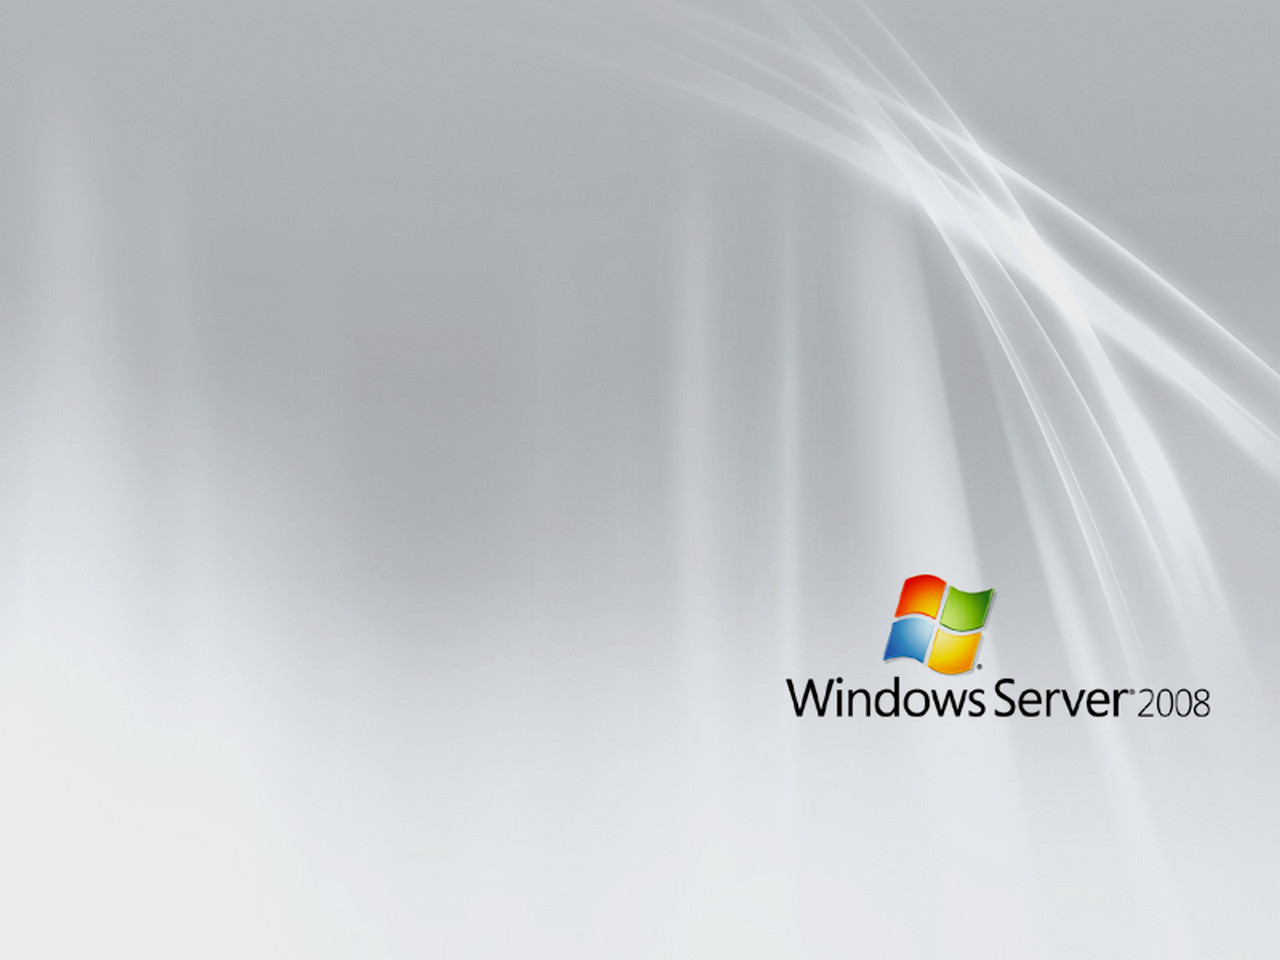  windows 2008 2015 auron2 windows server 2008 default desktop wallpaper